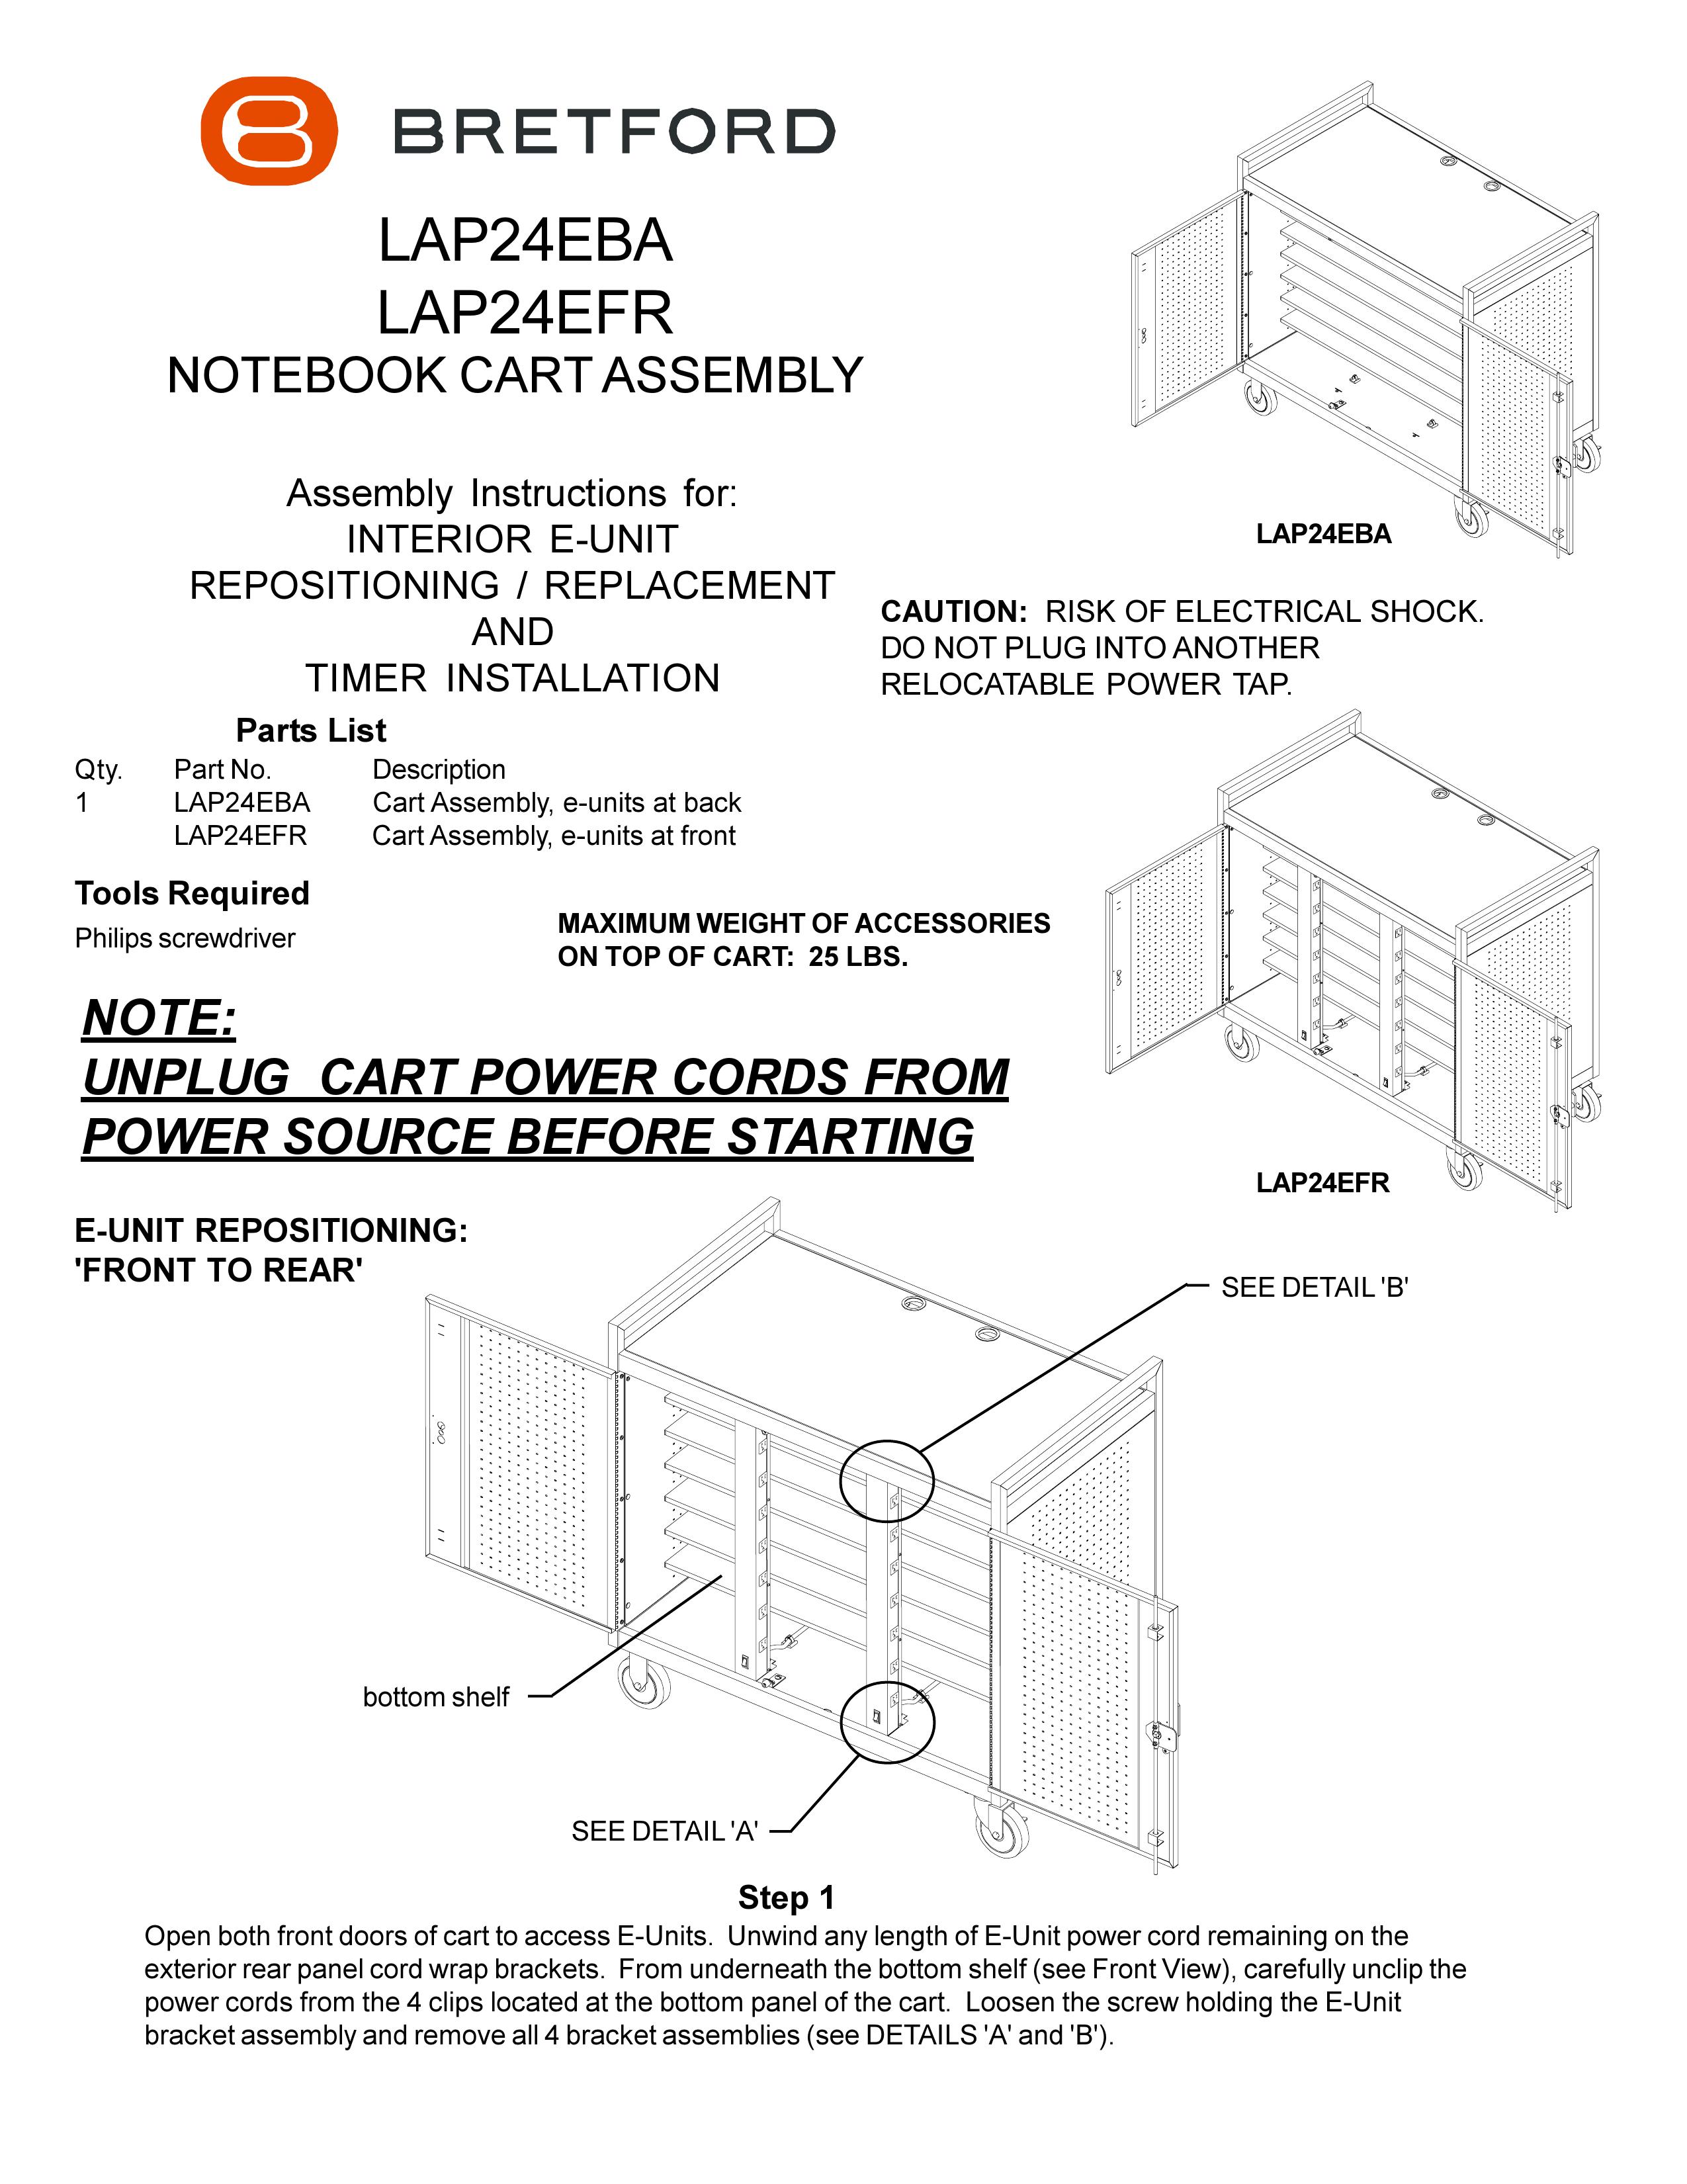 Bretford LAP24EBA Outdoor Cart User Manual